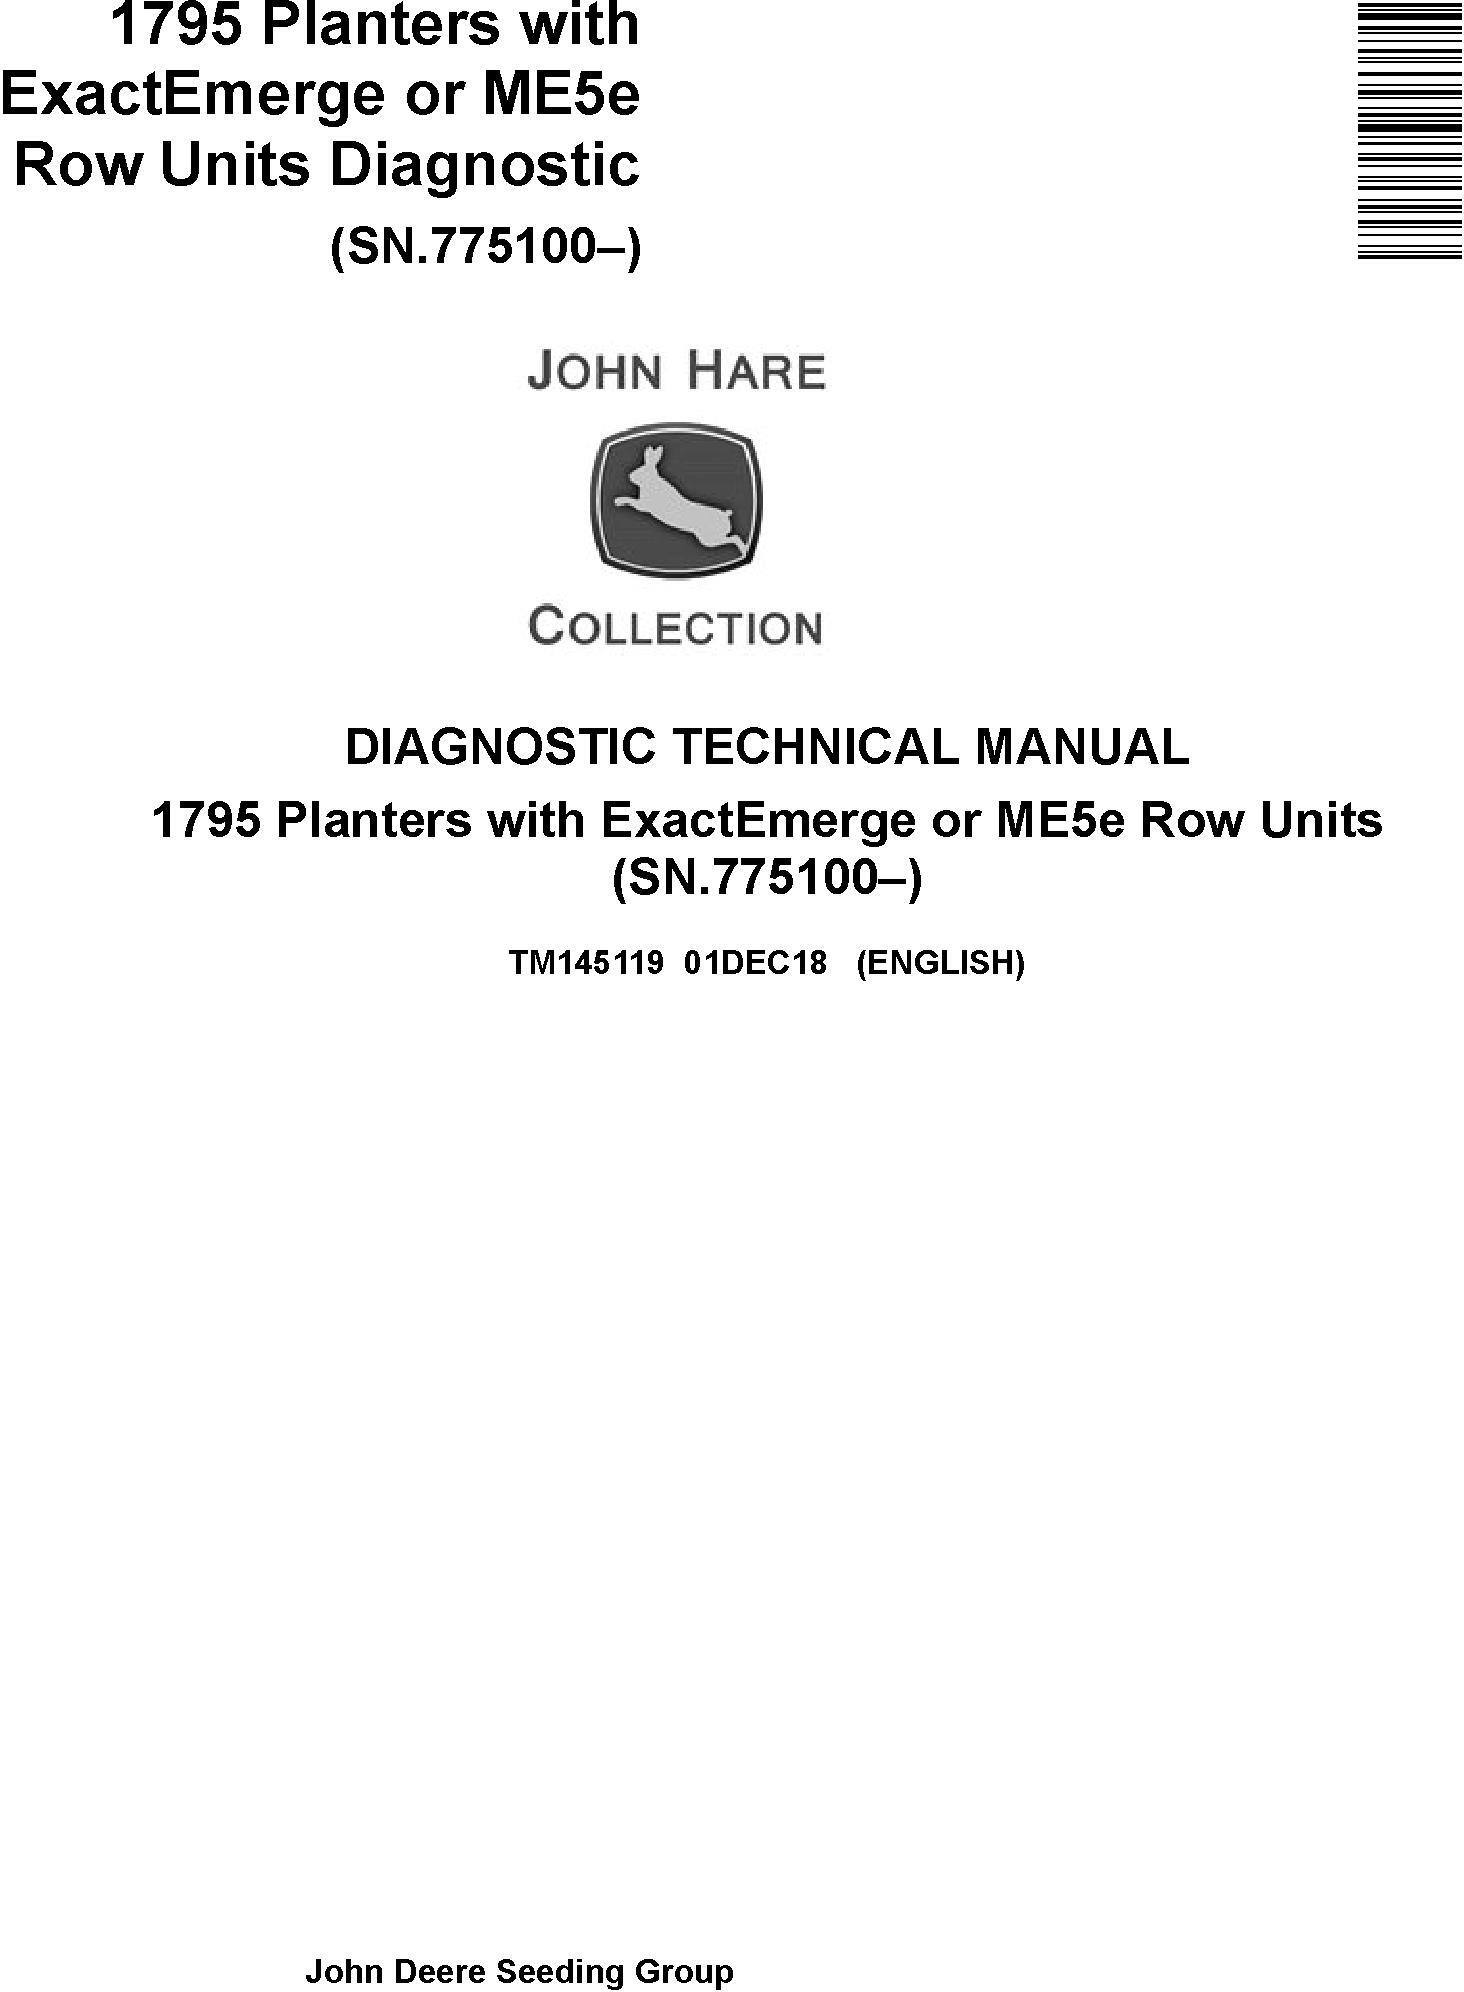 John Deere 1795 Planter Diagnostic Technical Manual TM145119